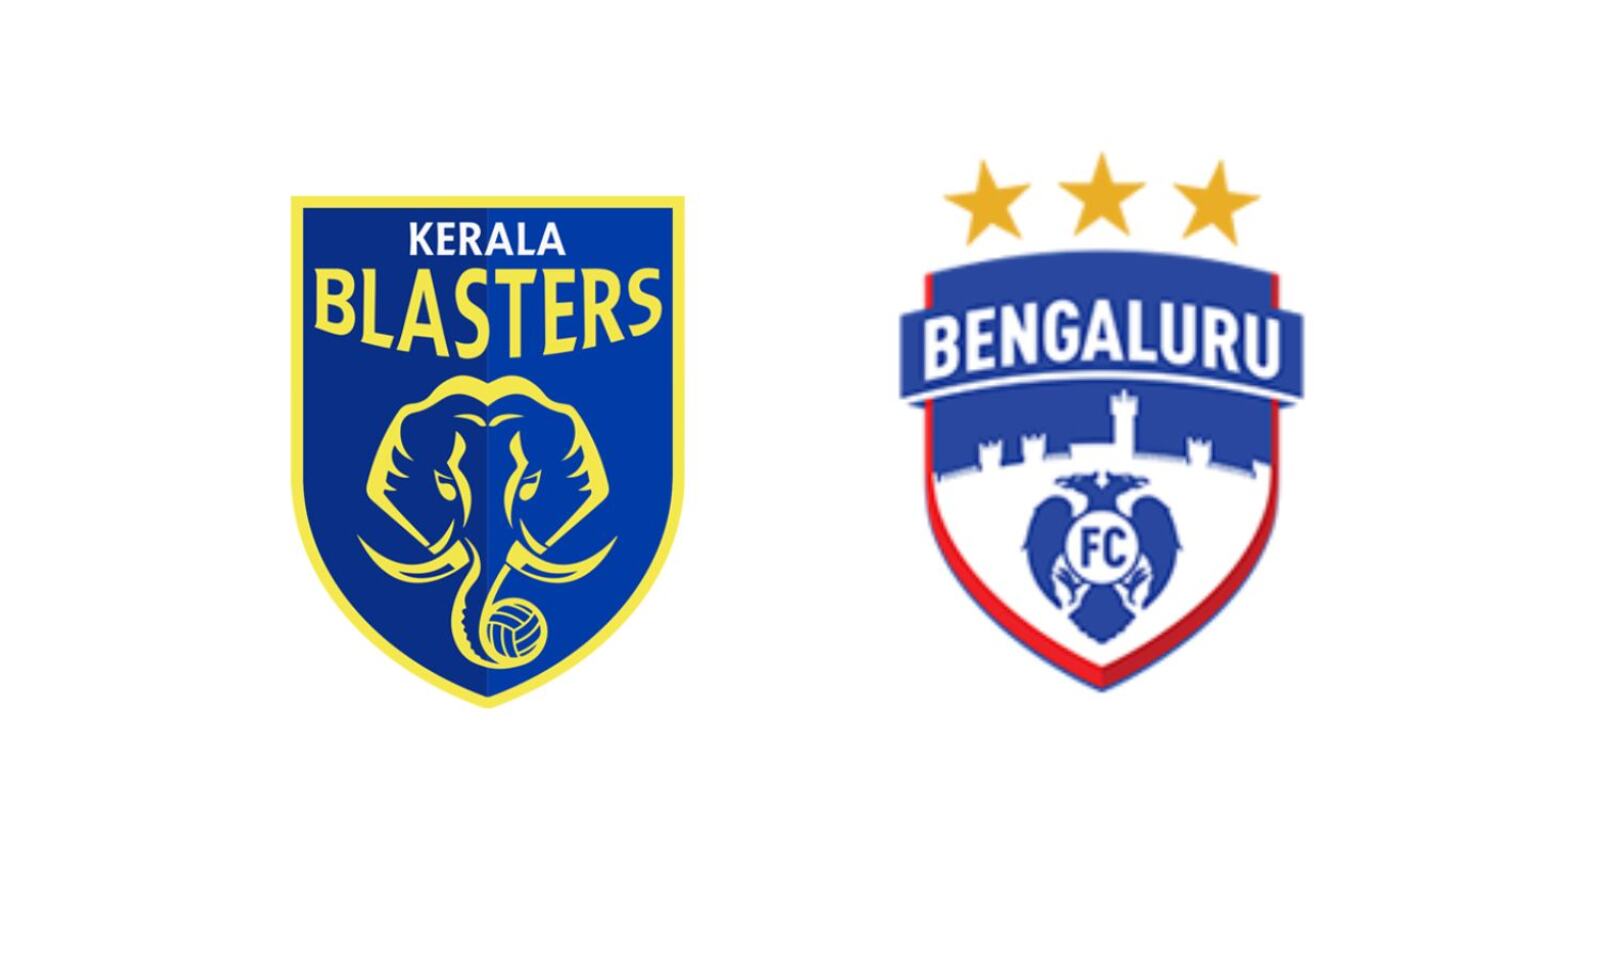 Kerala Blasters - YouTube